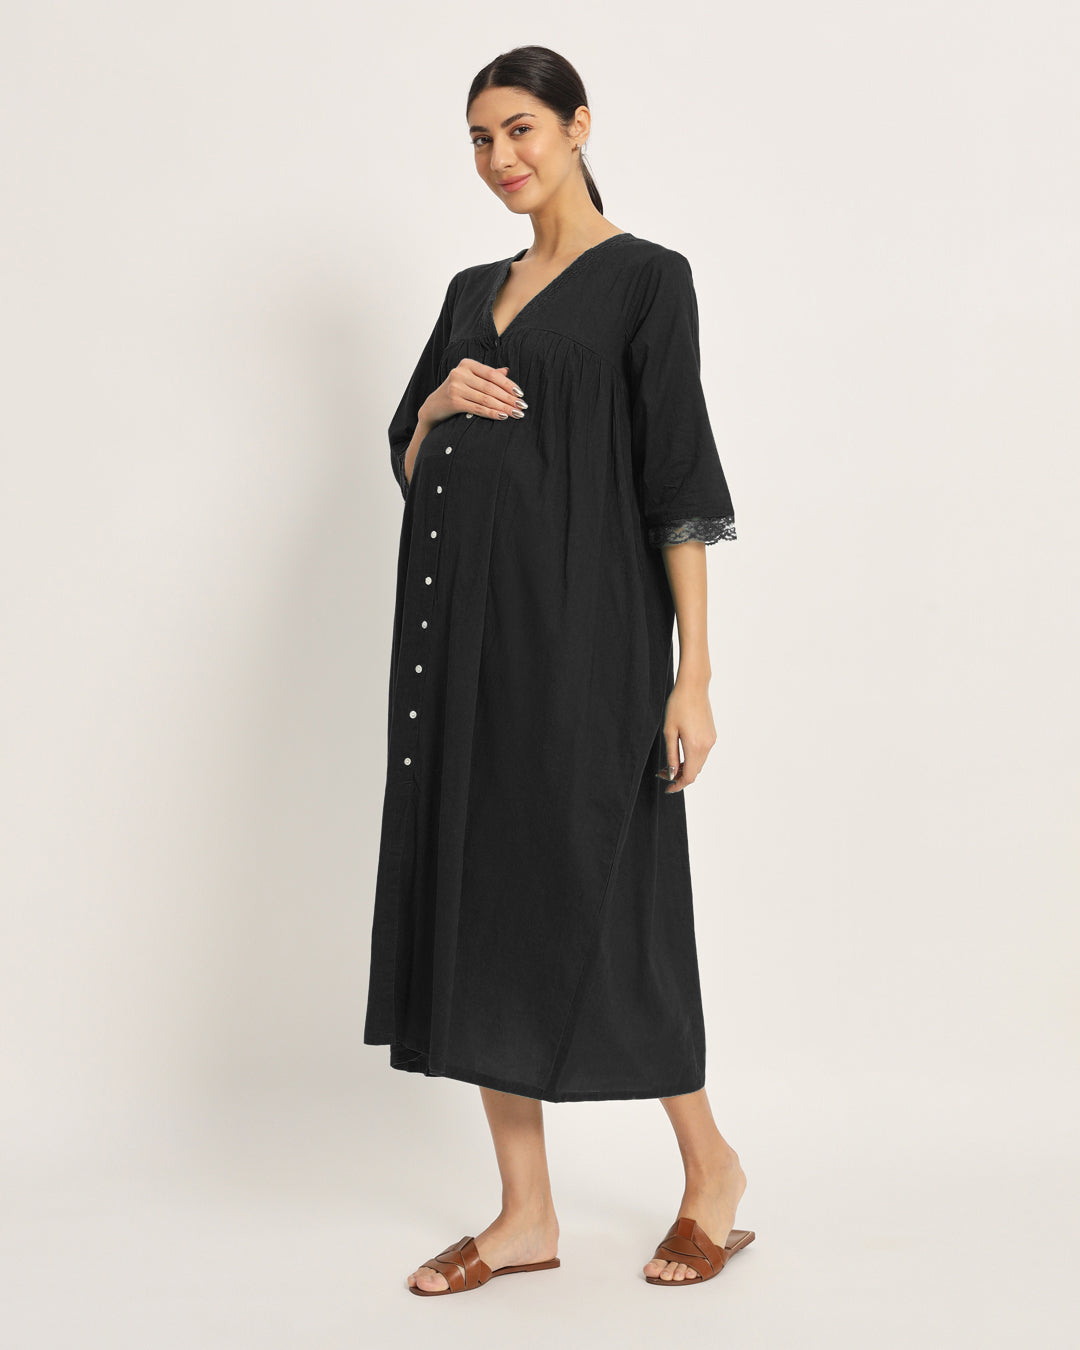 Combo: Black & Sage Green Stylish Preggo Maternity & Nursing Dress - Set of 2